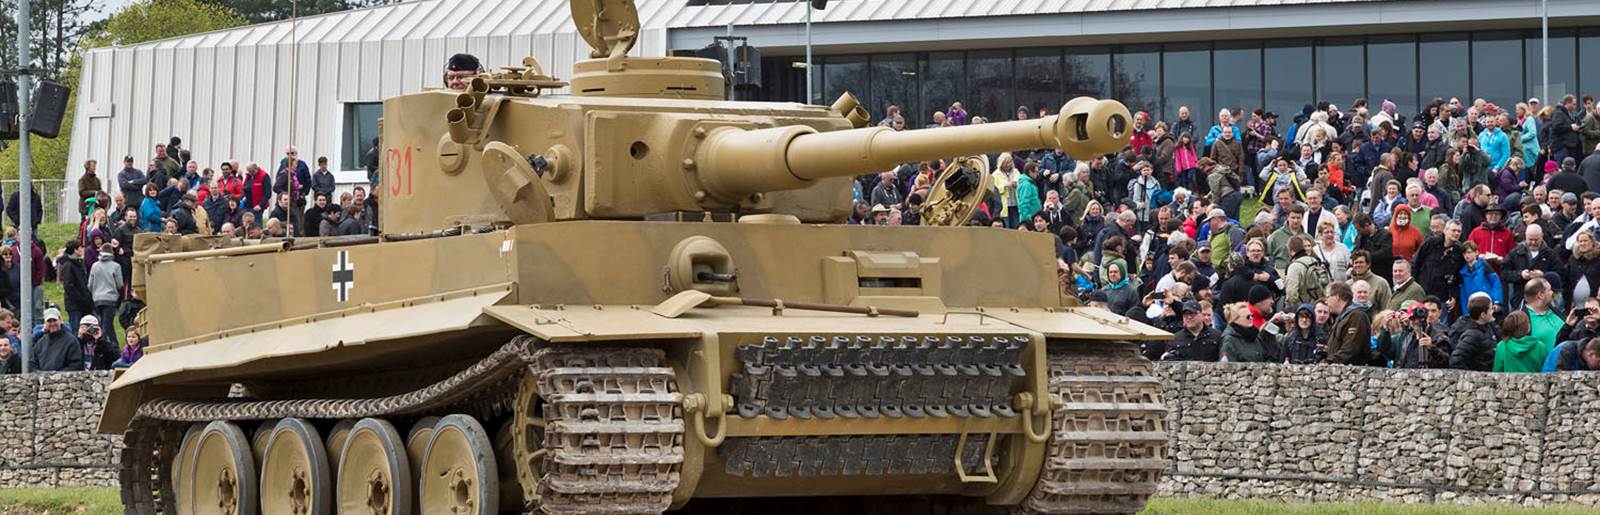 Tiger-tank 